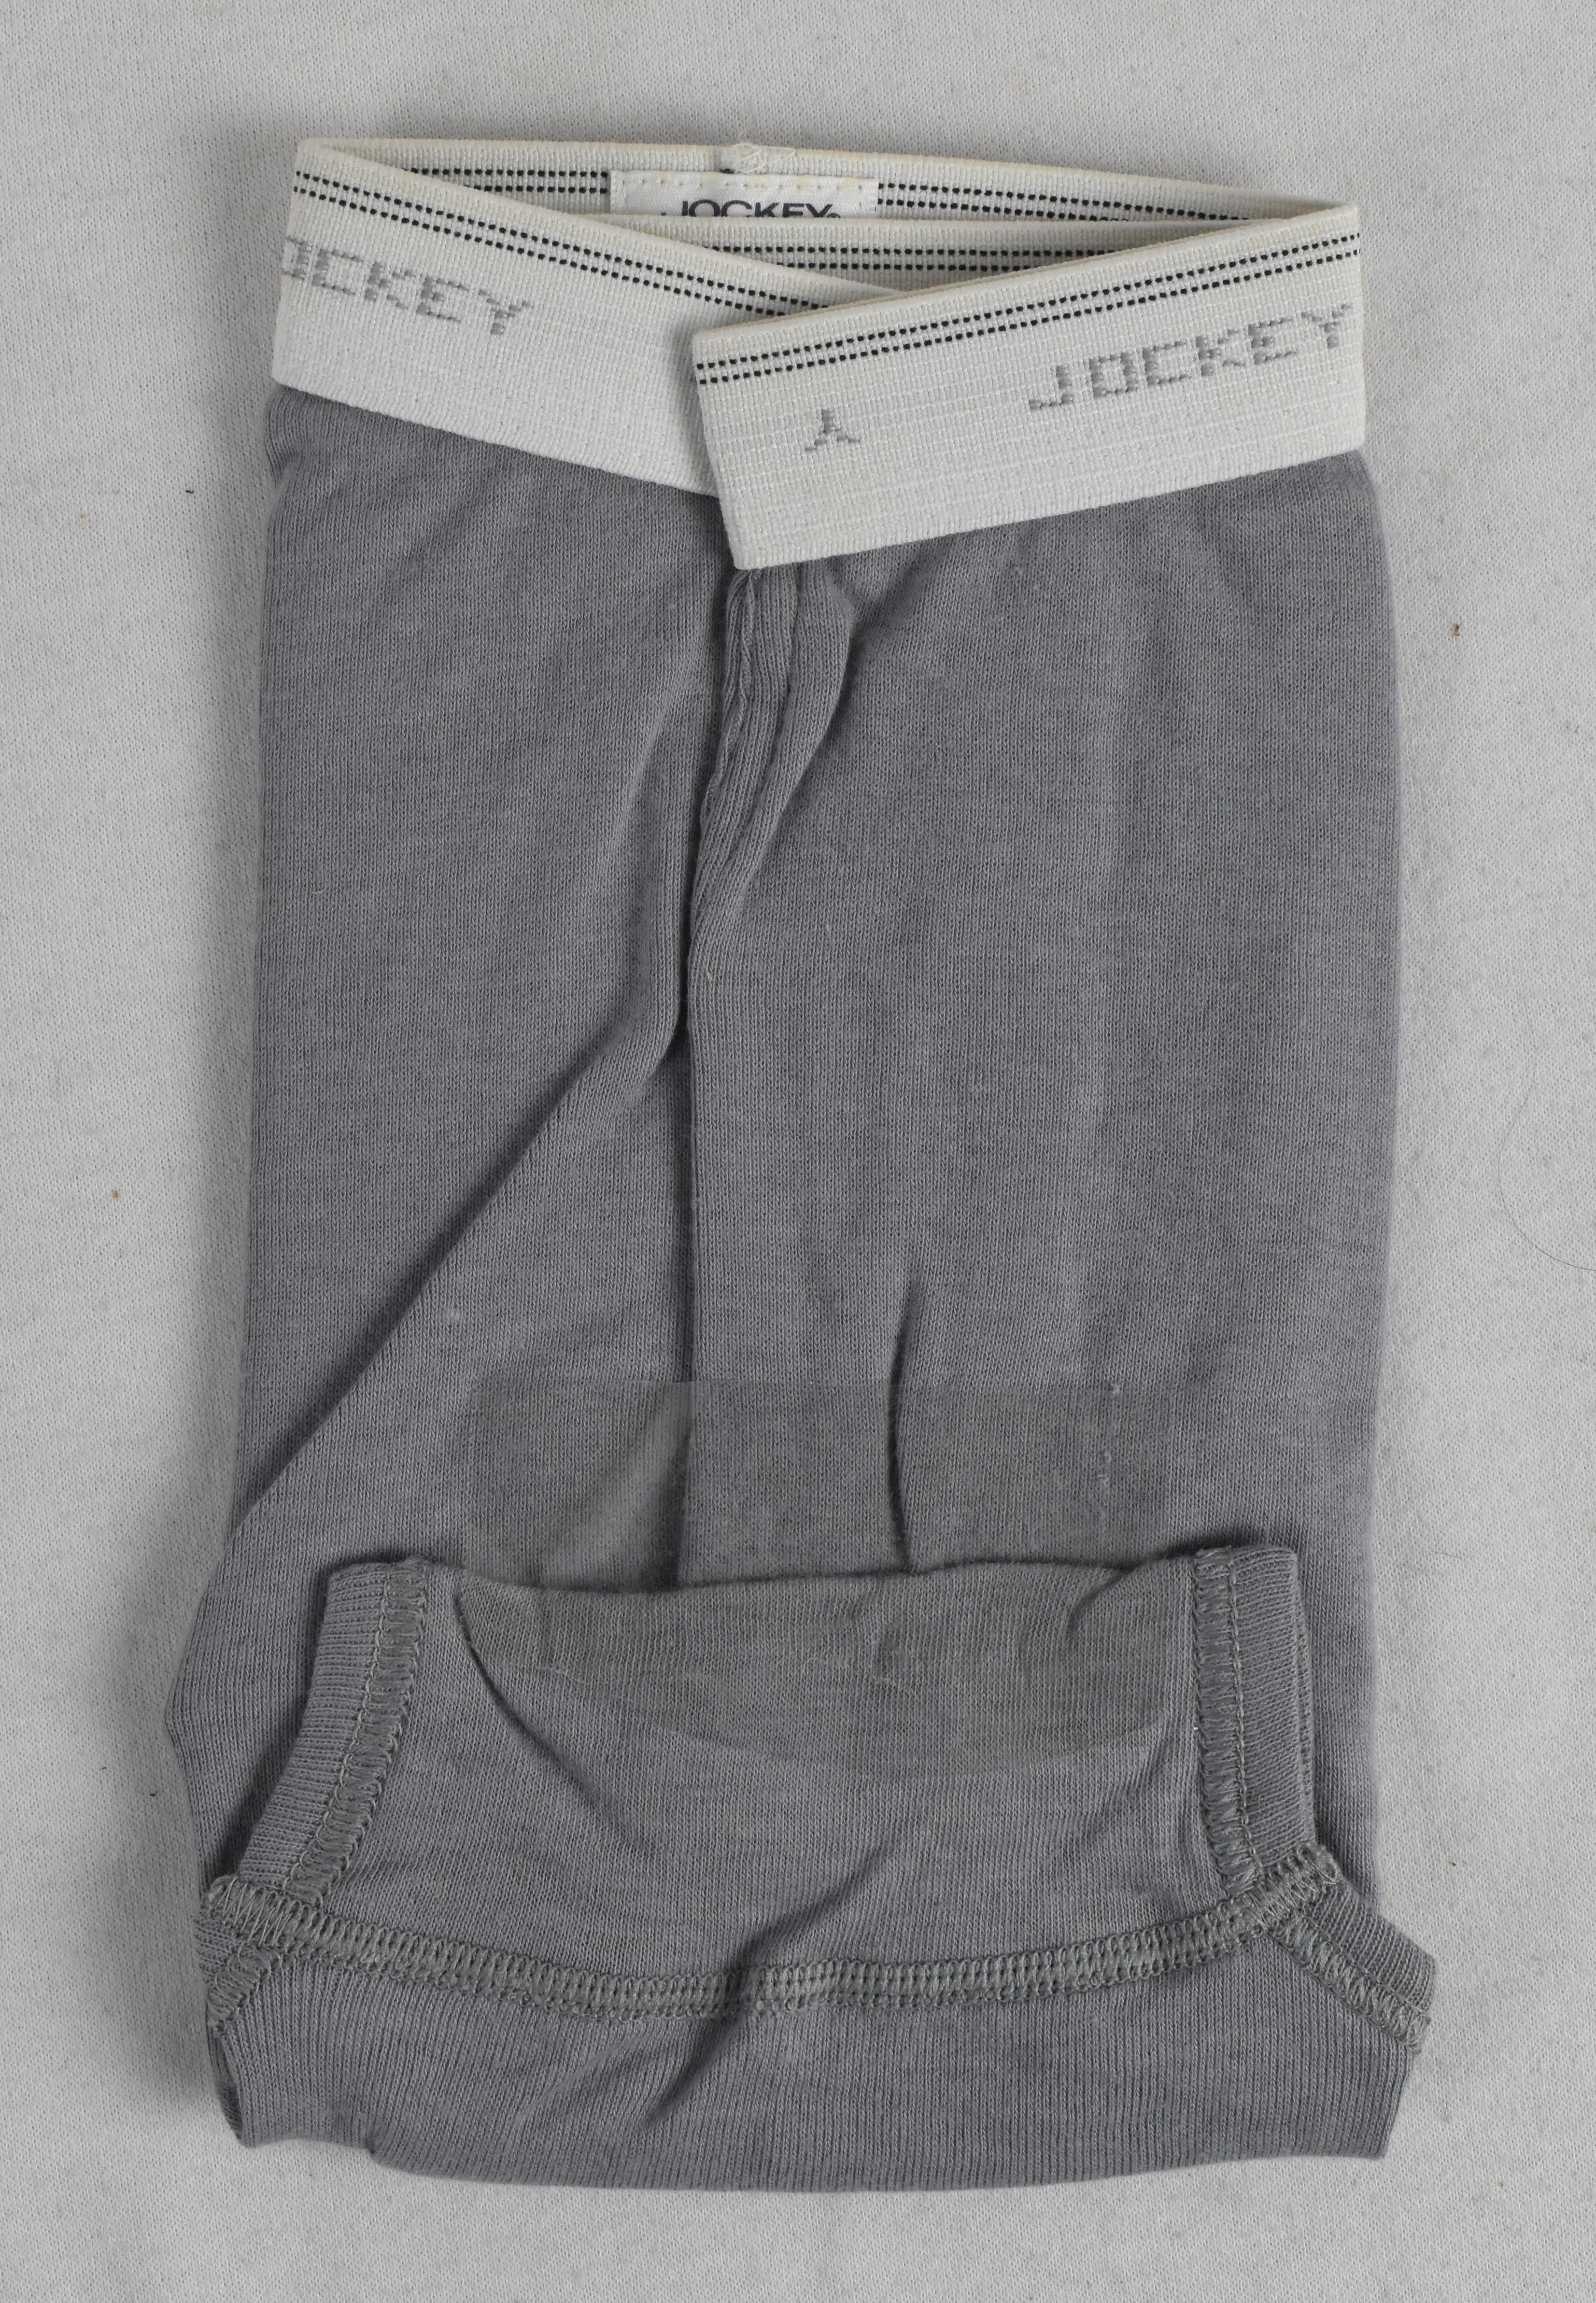 Jim Palmer Signed Autographed Jockey Underwear Photo With JSA COA —  Showpieces Sports